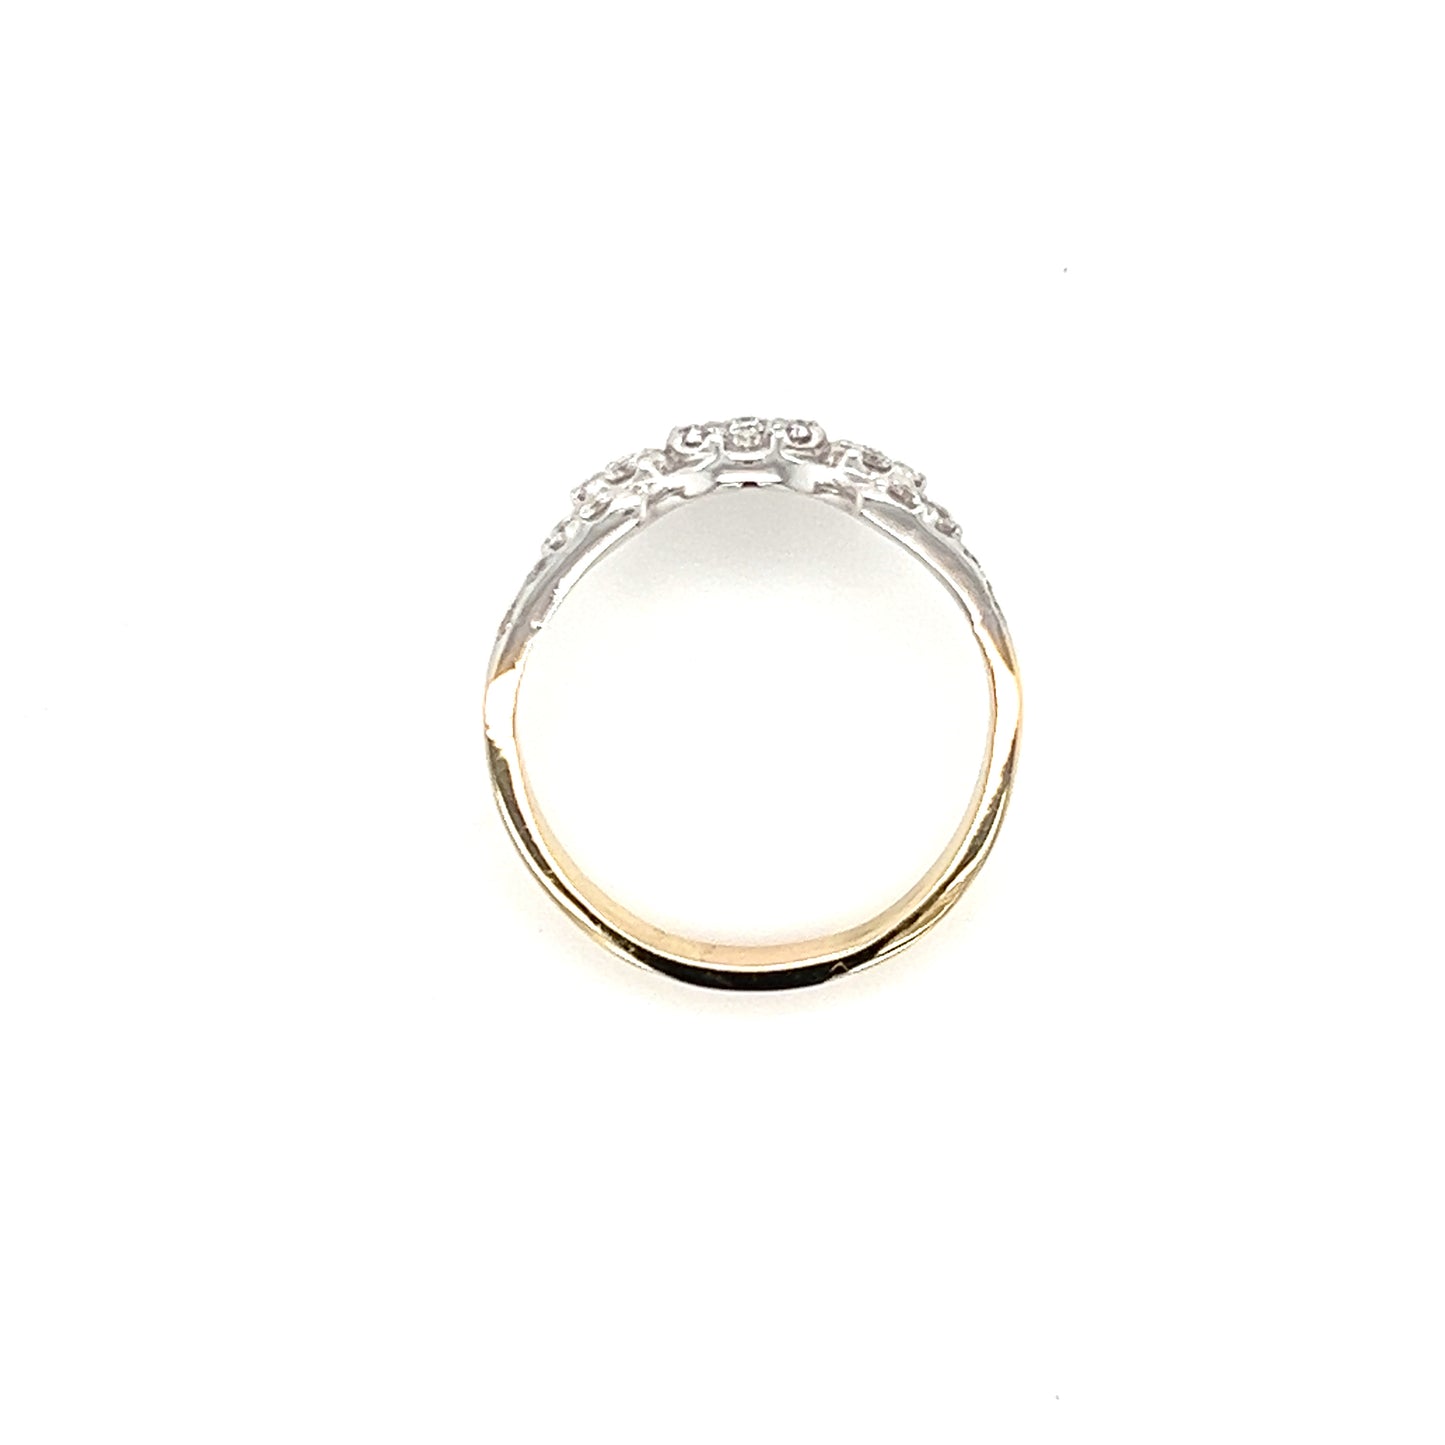 Sunburst Diamond Ring with Twenty-Two Diamond in 14K Yellow and White Gold Top View